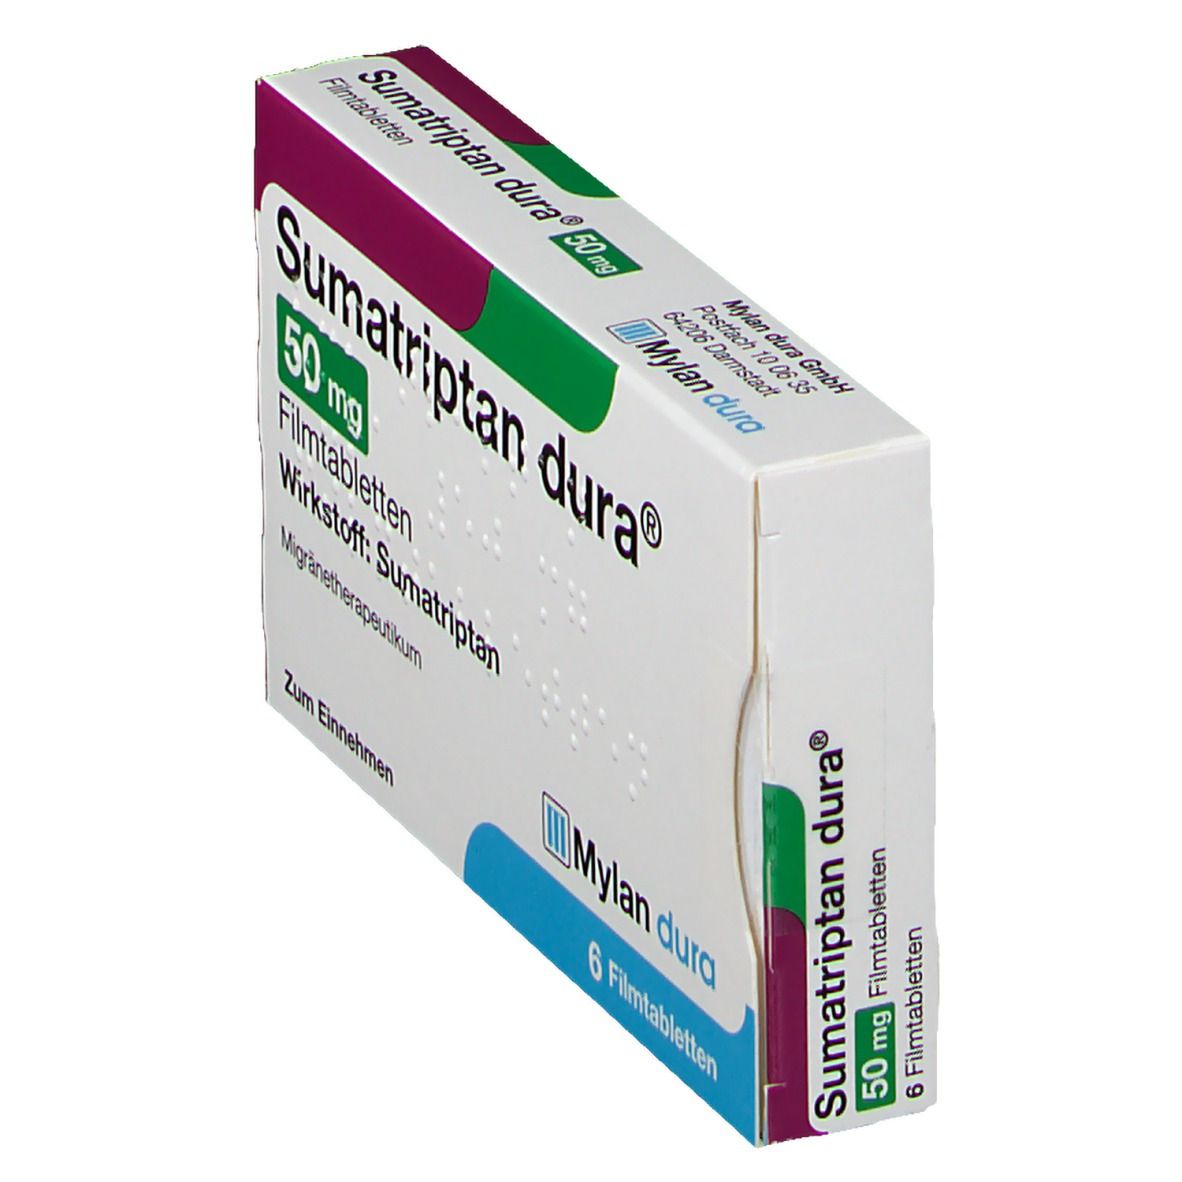 Sumatriptan dura® 50 mg